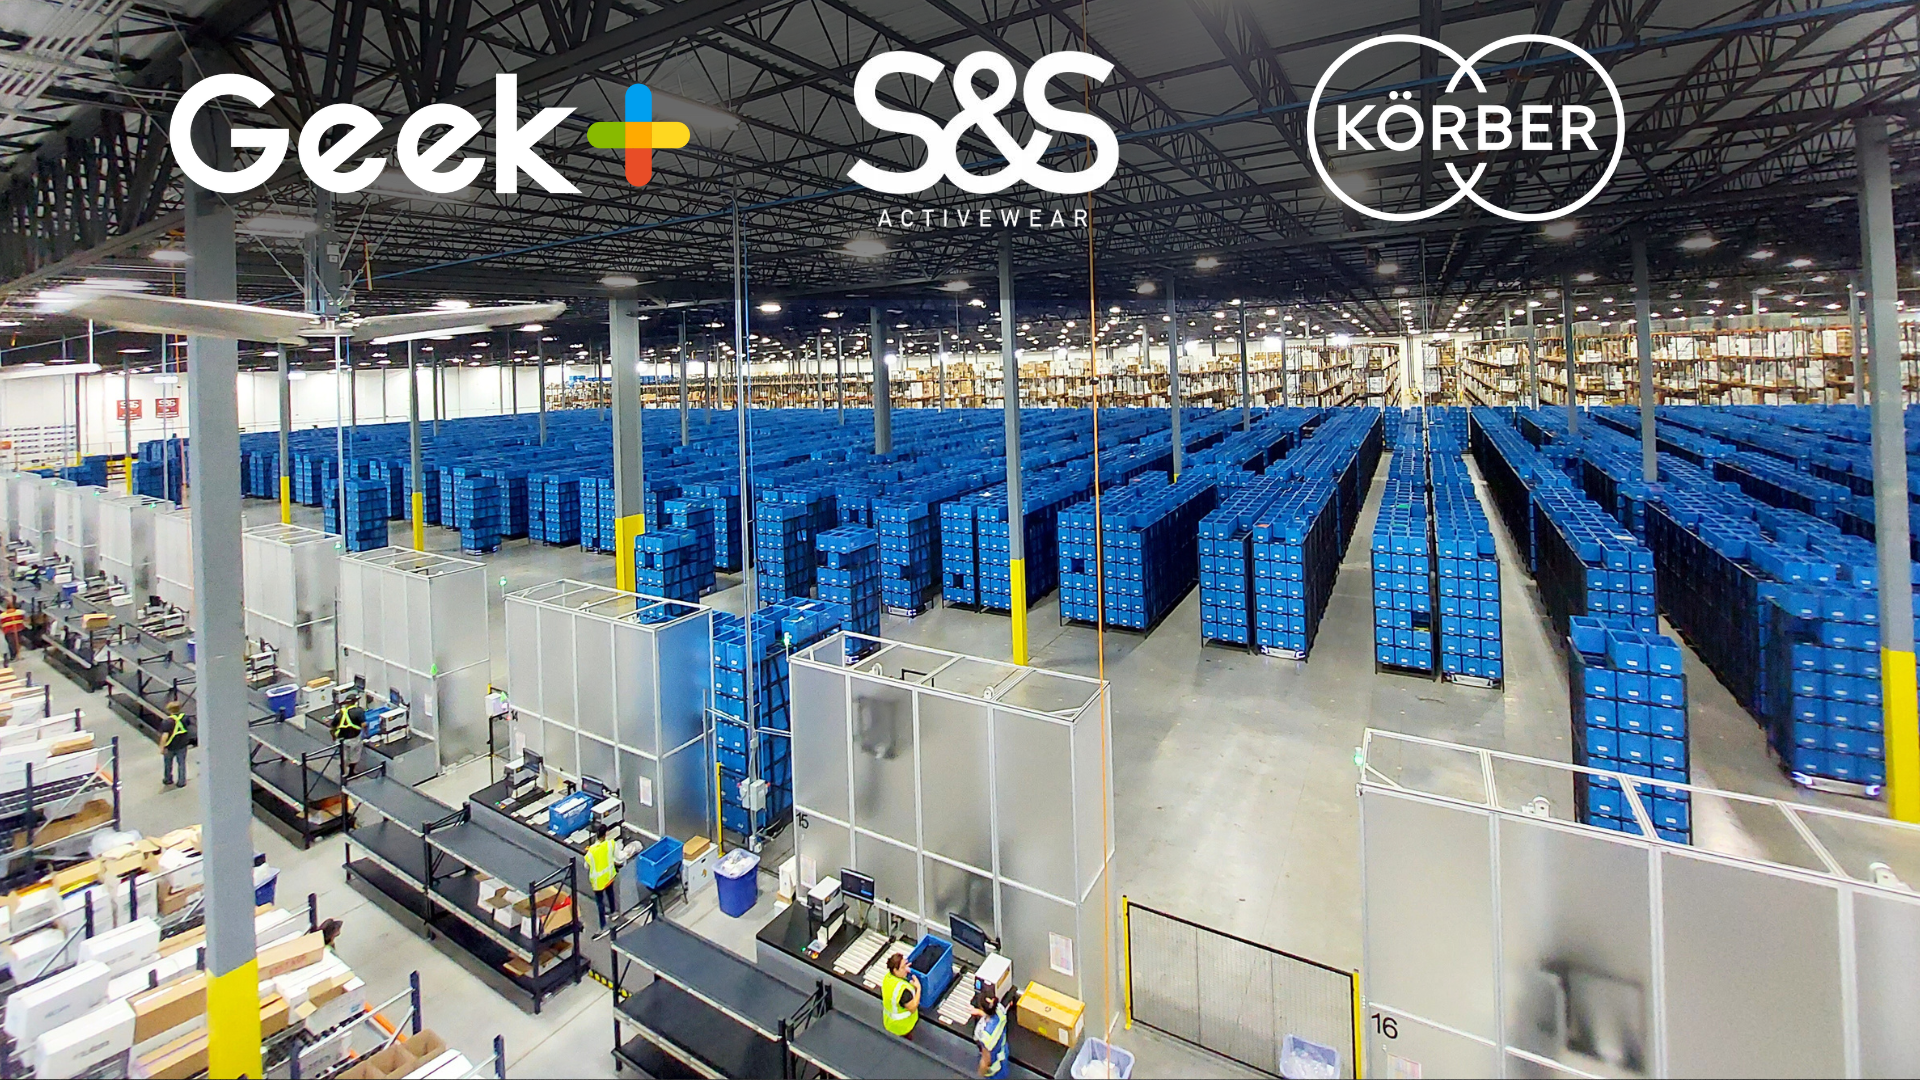 S&S Activewear strengthens collaboration with Körber to enhance warehouse efficiency through Geekplus robotics